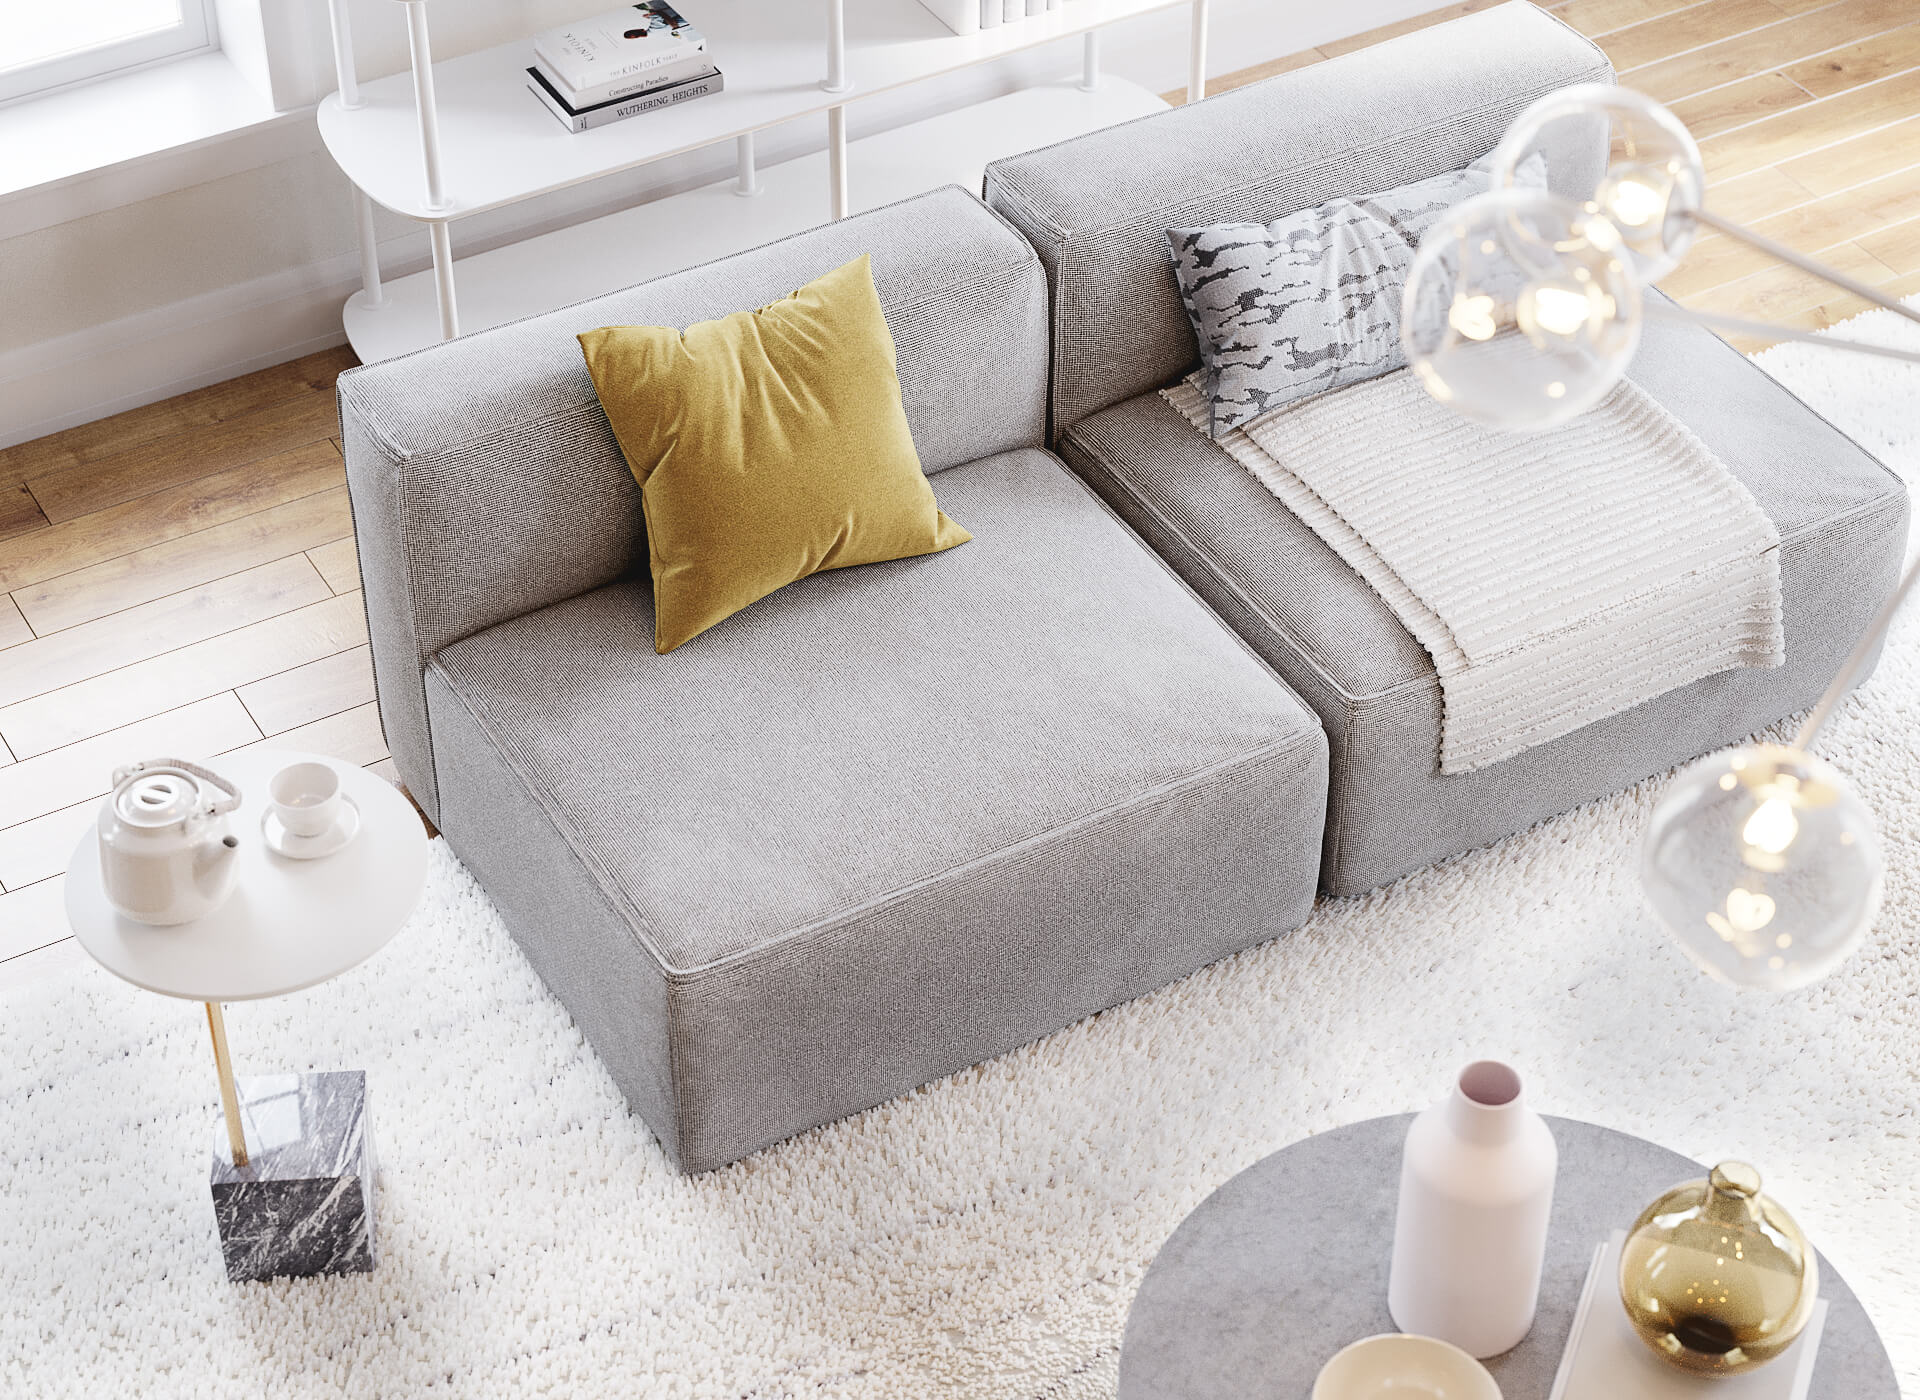 Sofa 3D Render in an Interior Scene